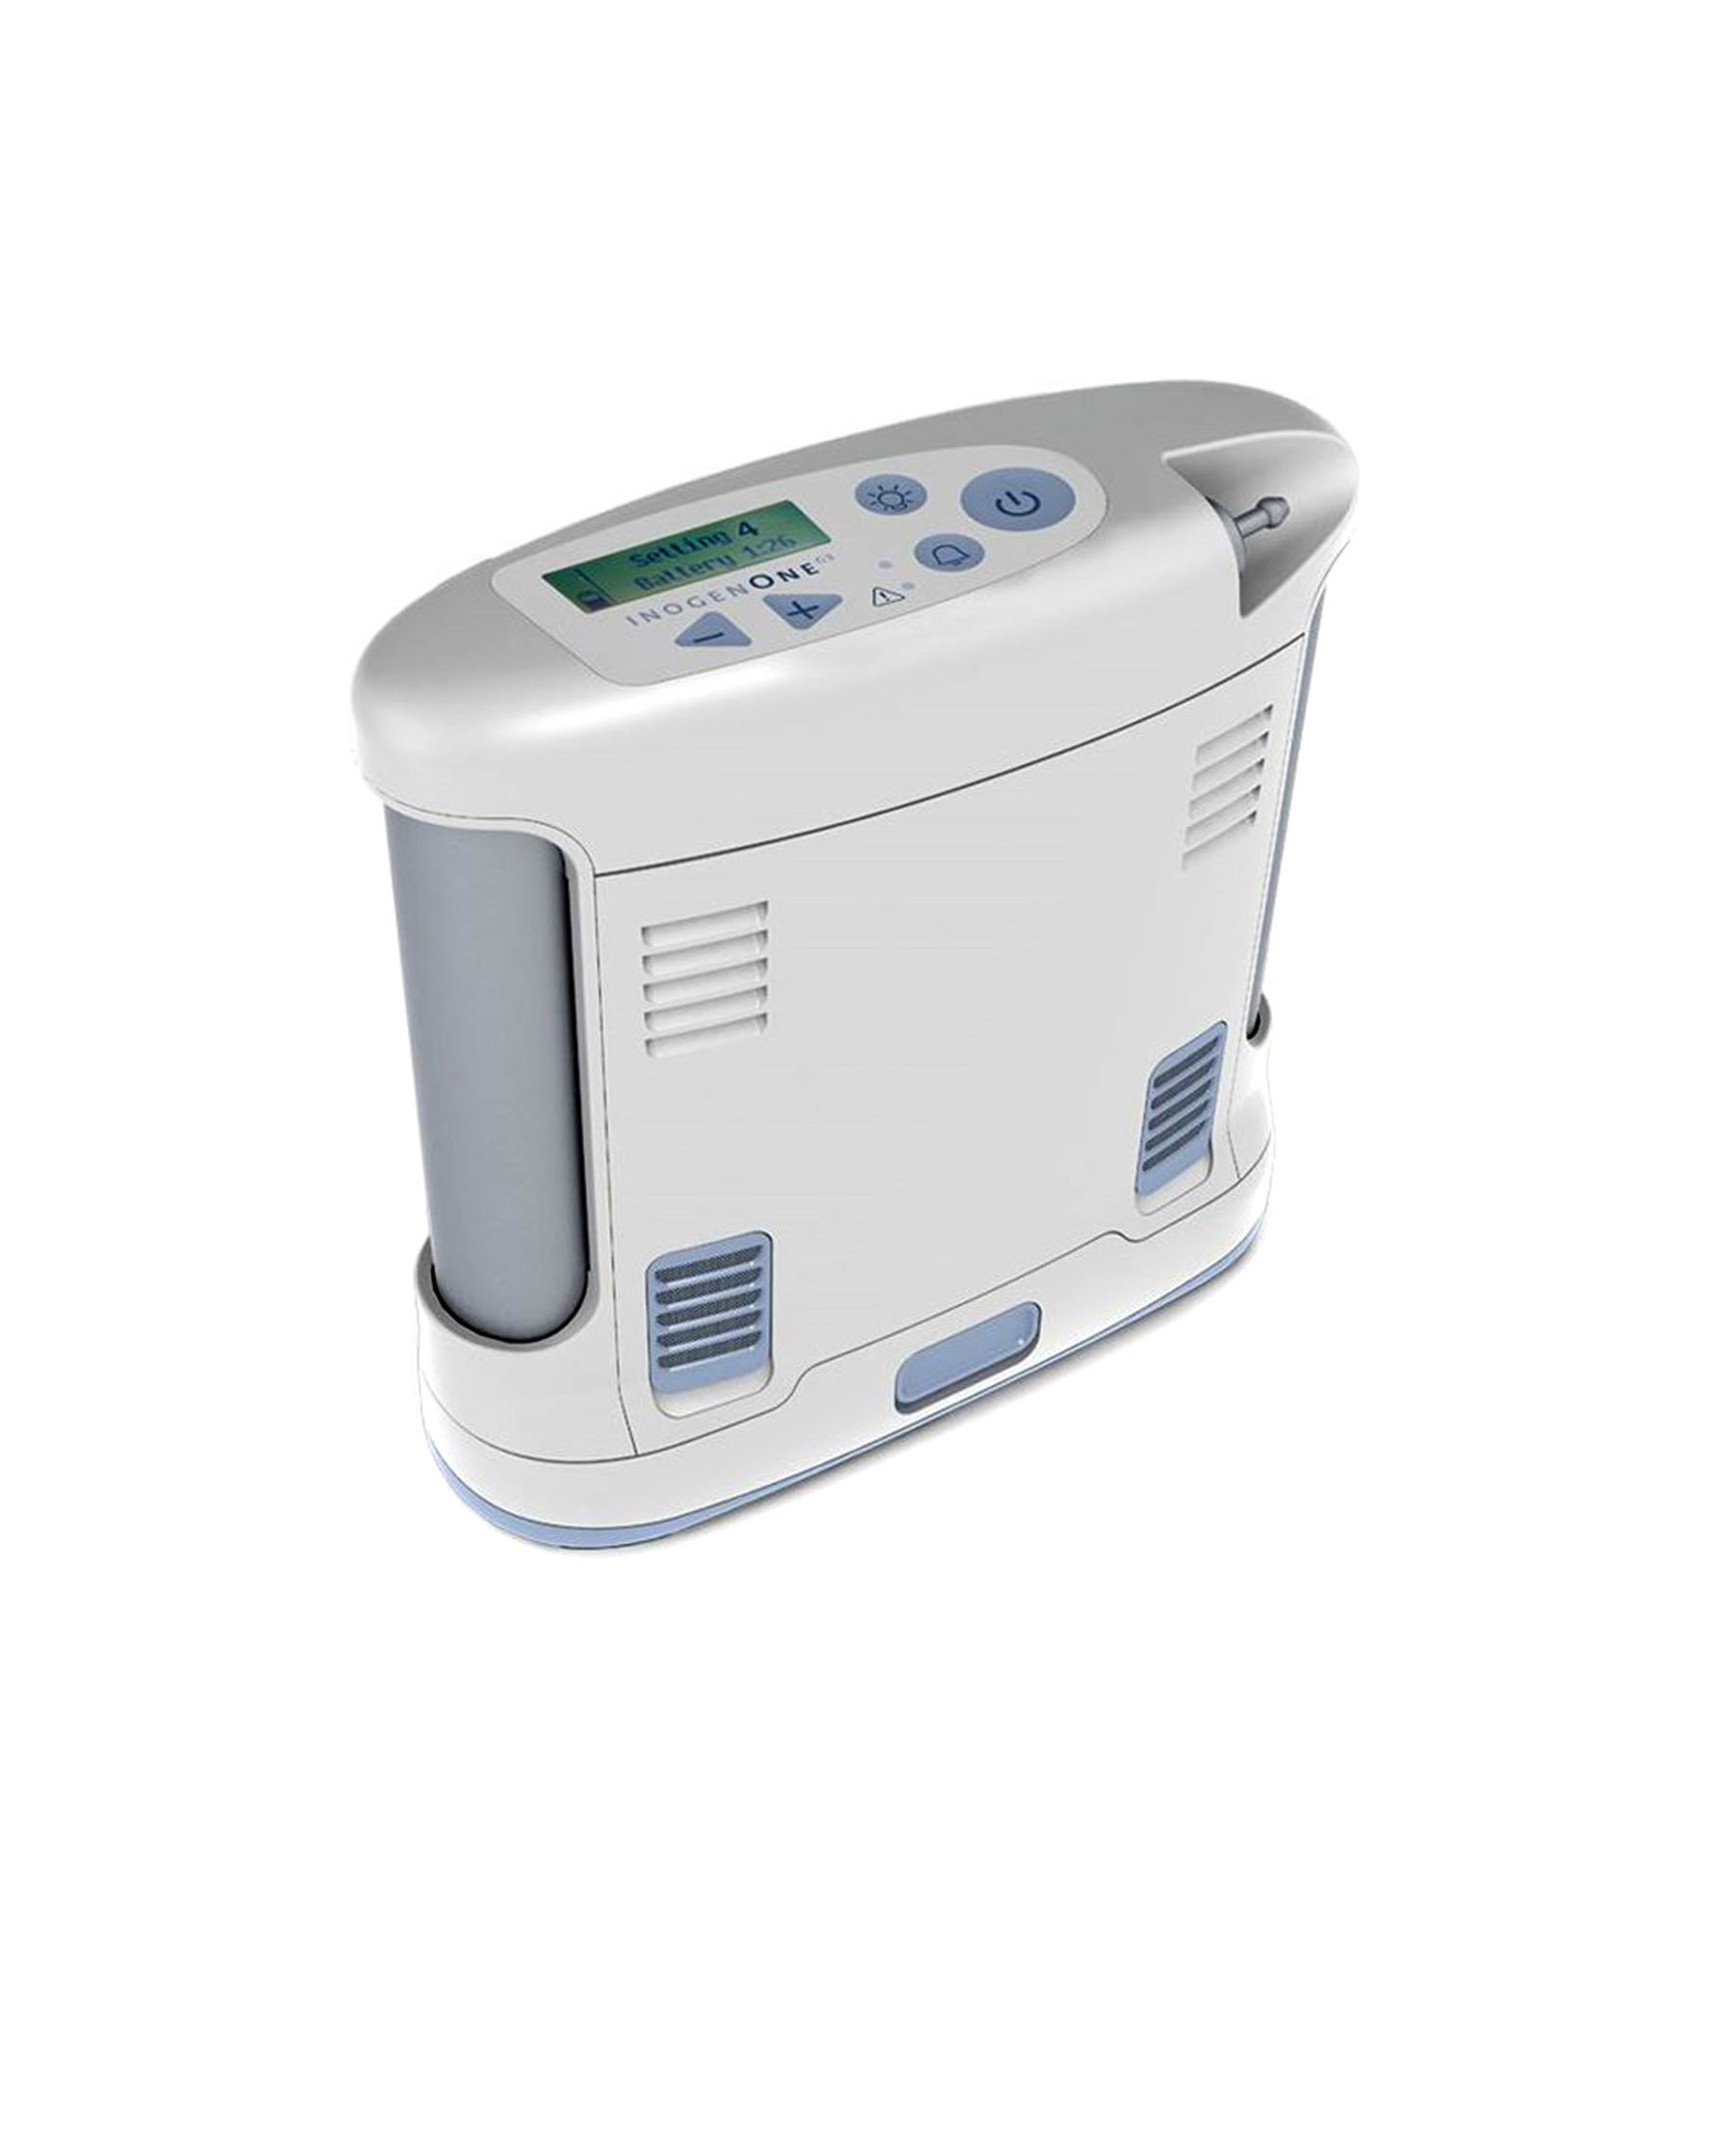 Inogen One G3 Portable Oxygen Concentrator Medsurge Healthcare Limited 0711